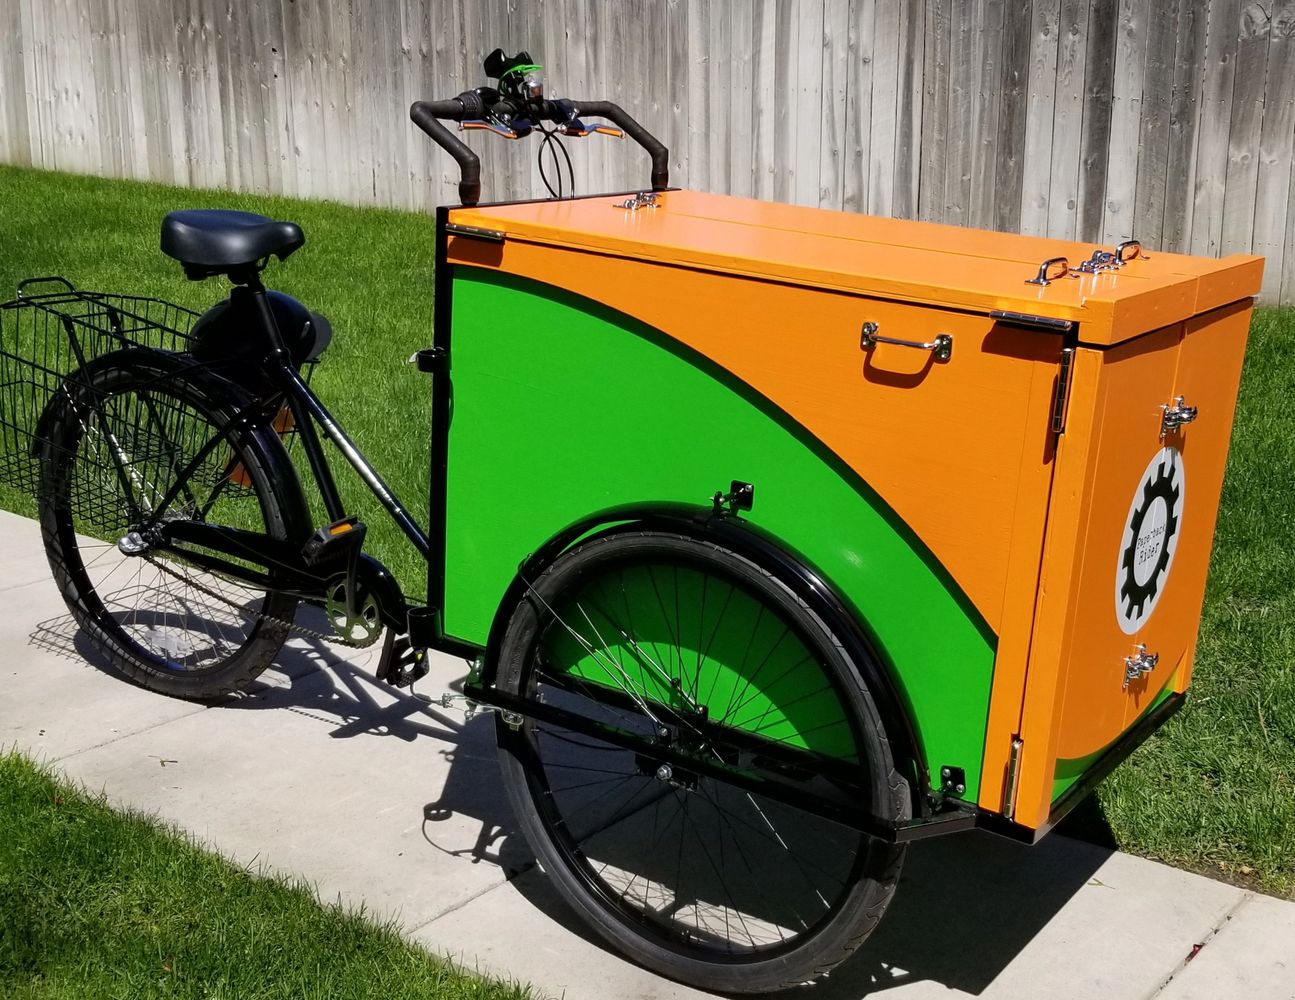 A black, orange, and green book bike called Paperback Rider.